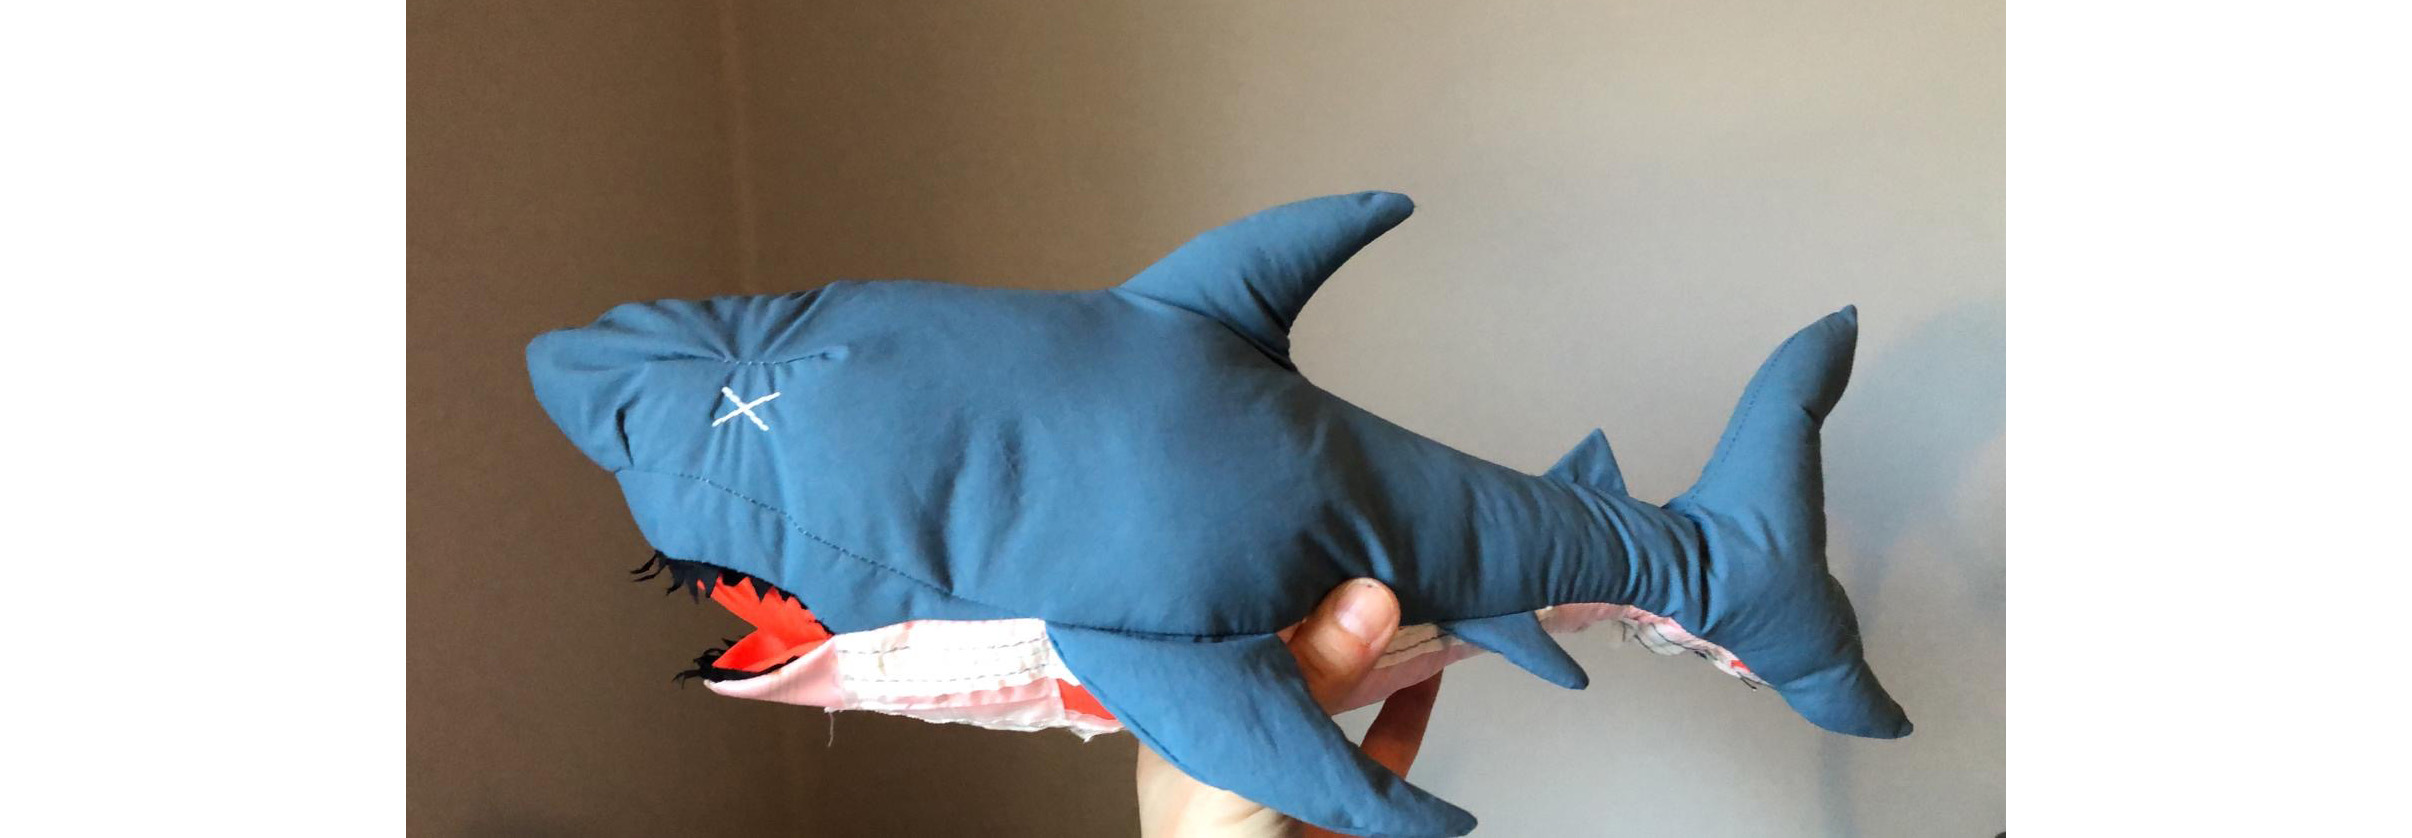 Raeburn shark, handmade